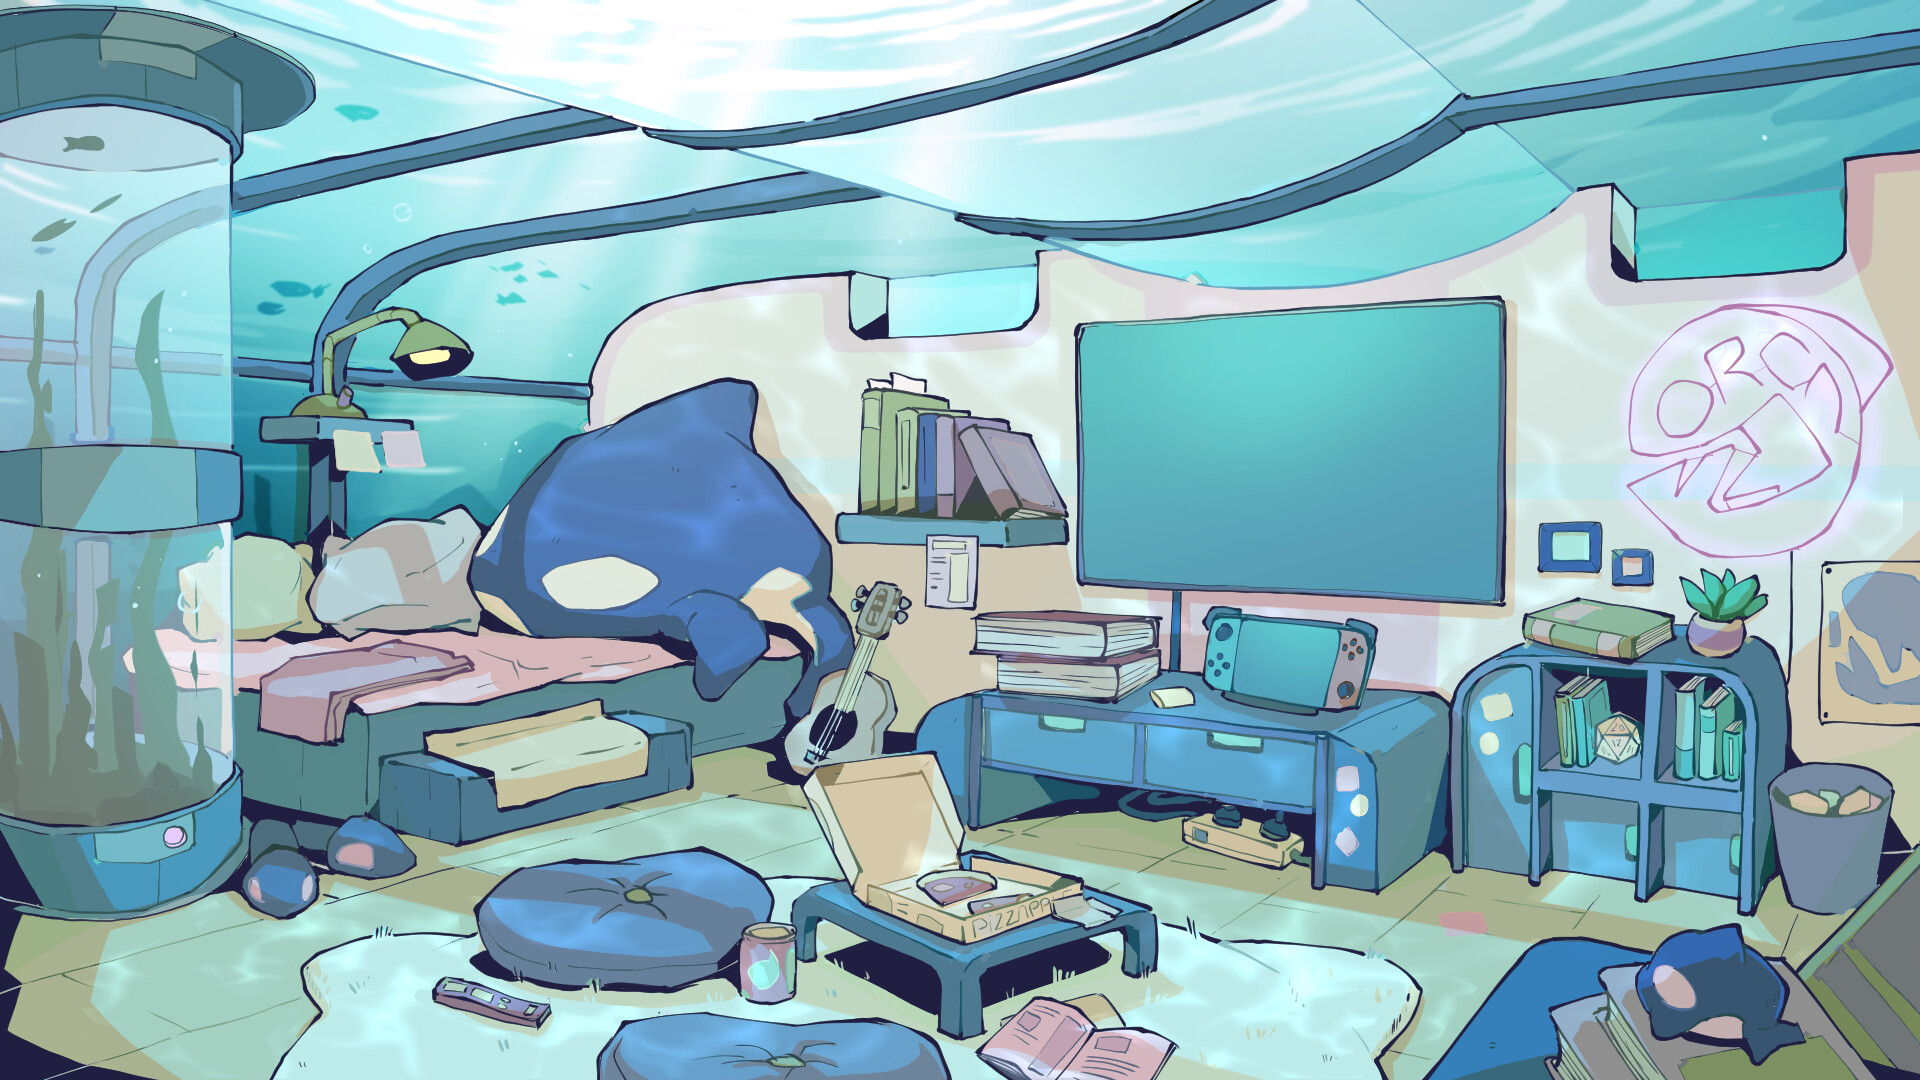 Anime Girl Under The Sea Live Wallpaper - MoeWalls